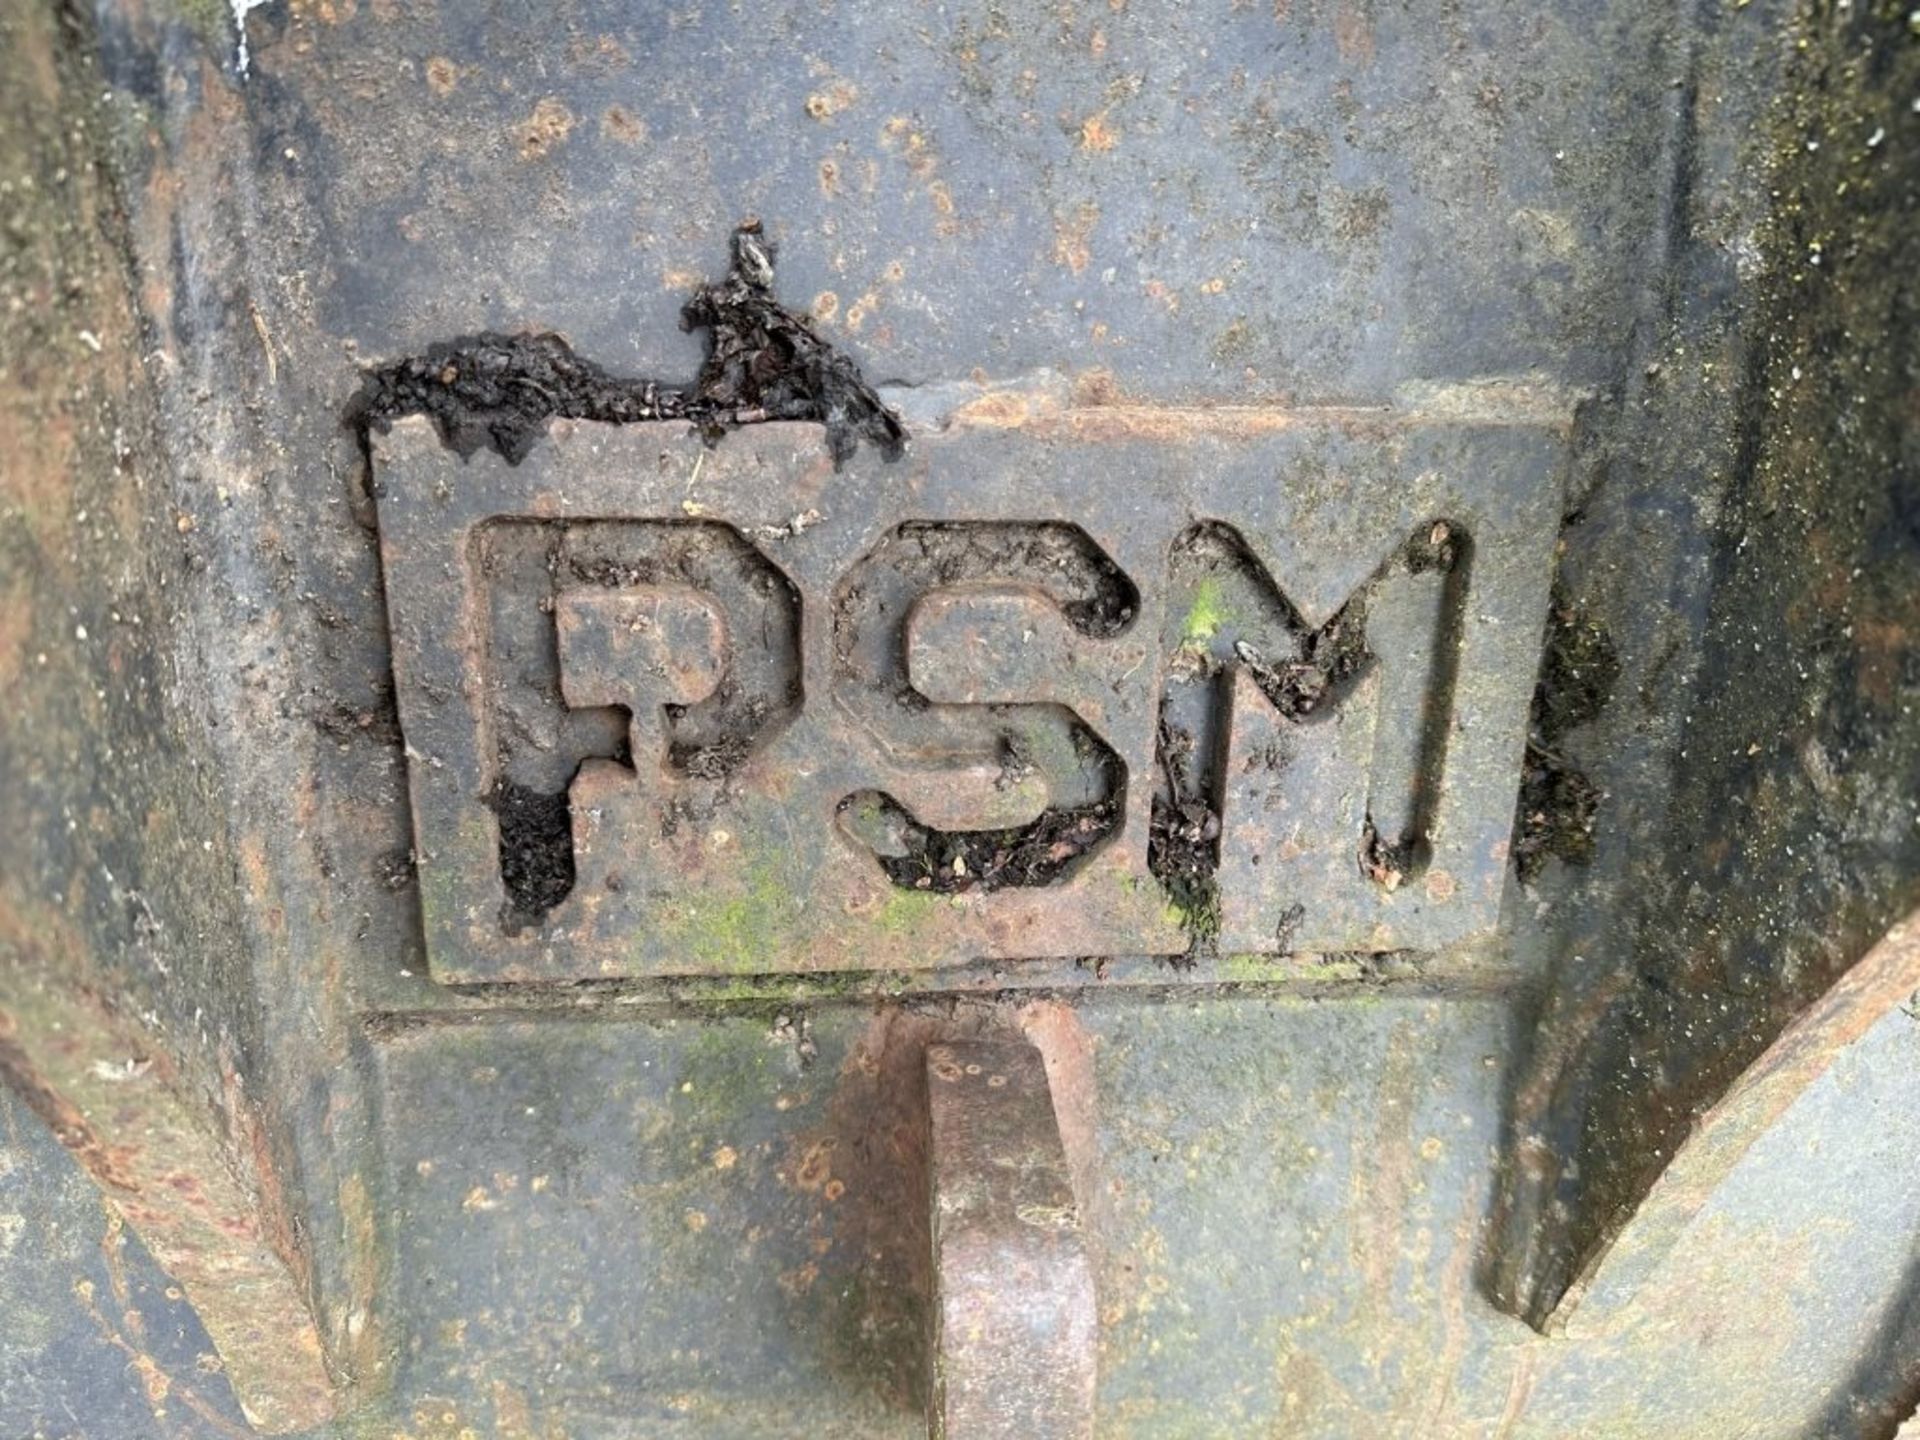 PSM 24" Dig Bucket - Image 5 of 6